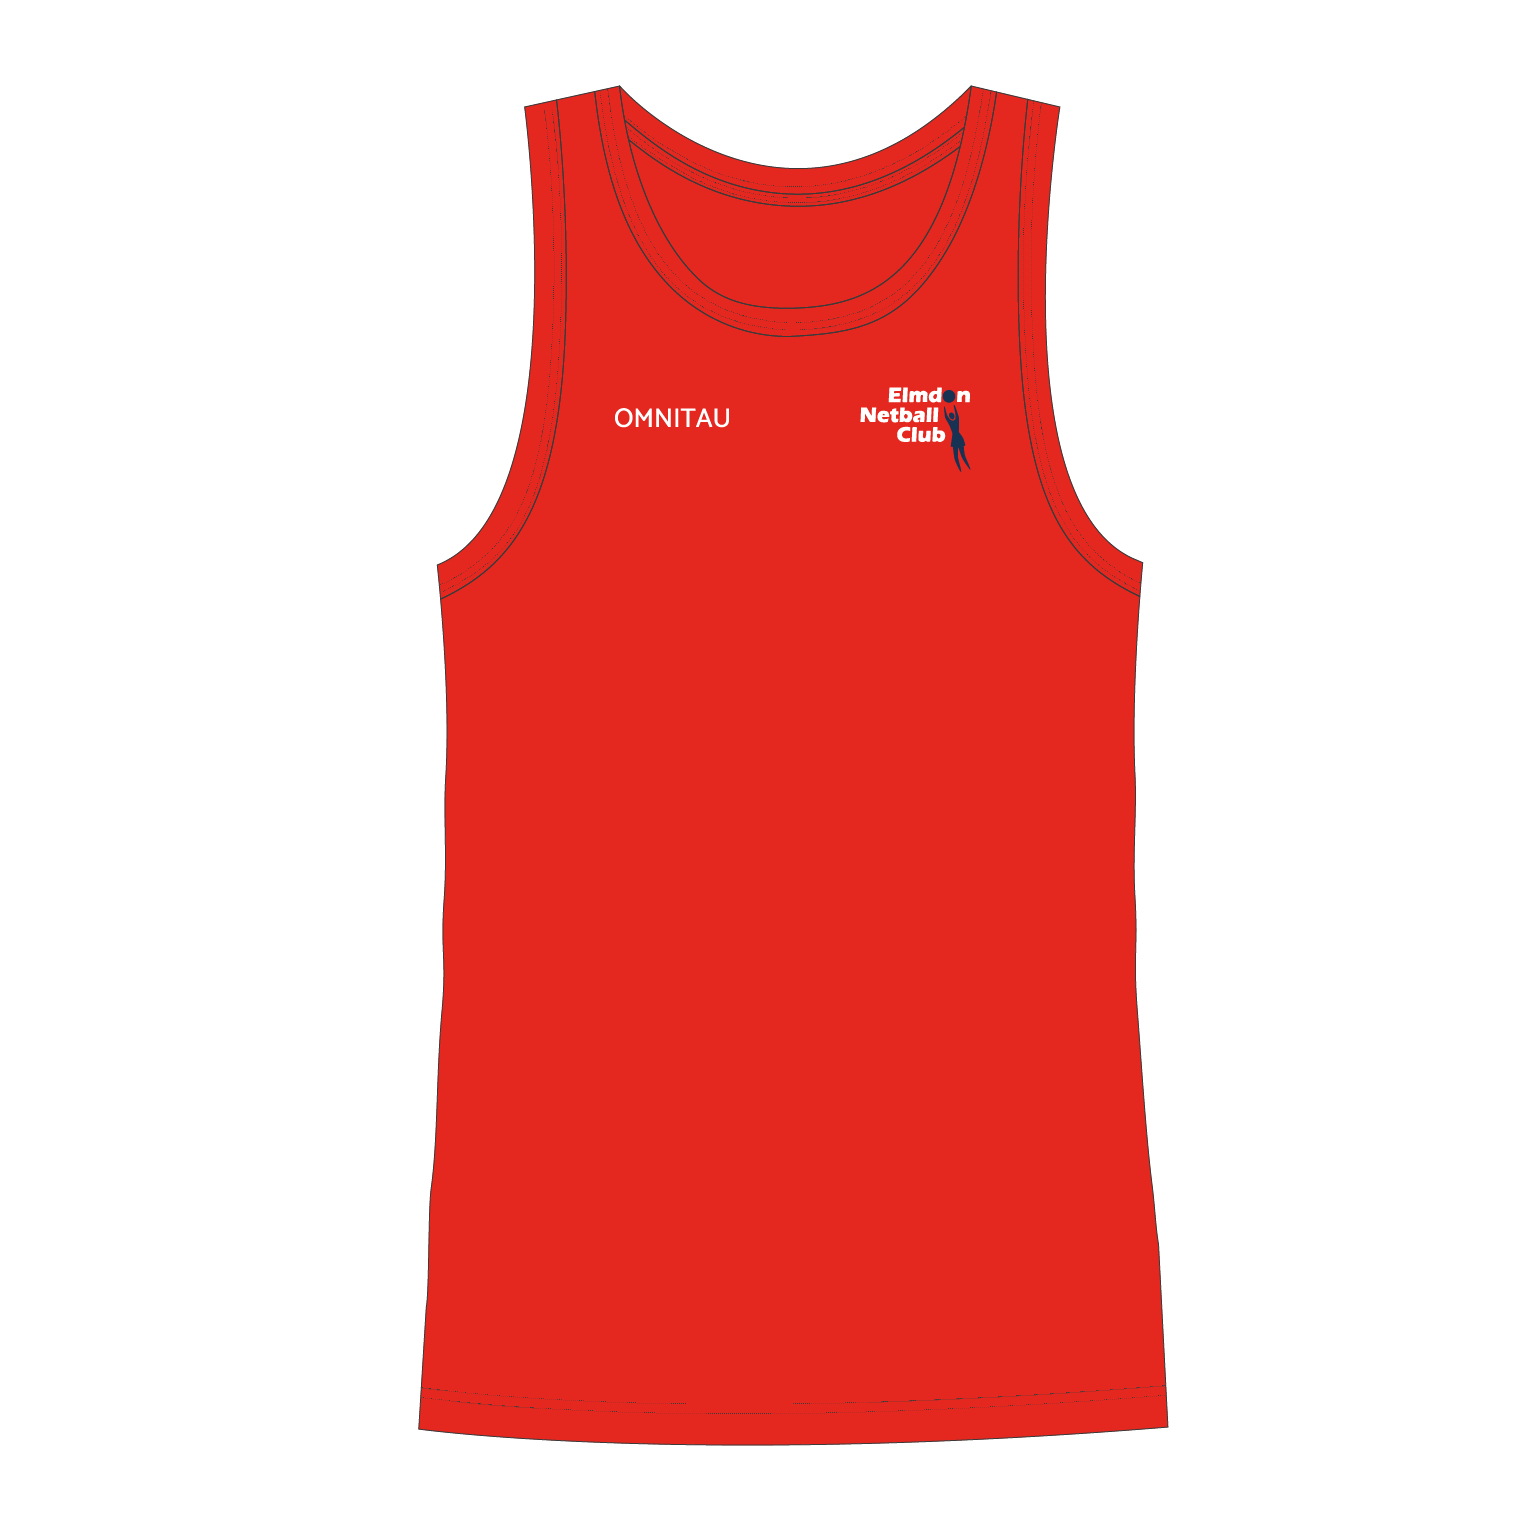 Elmdon Netball Club Training Vest - Red